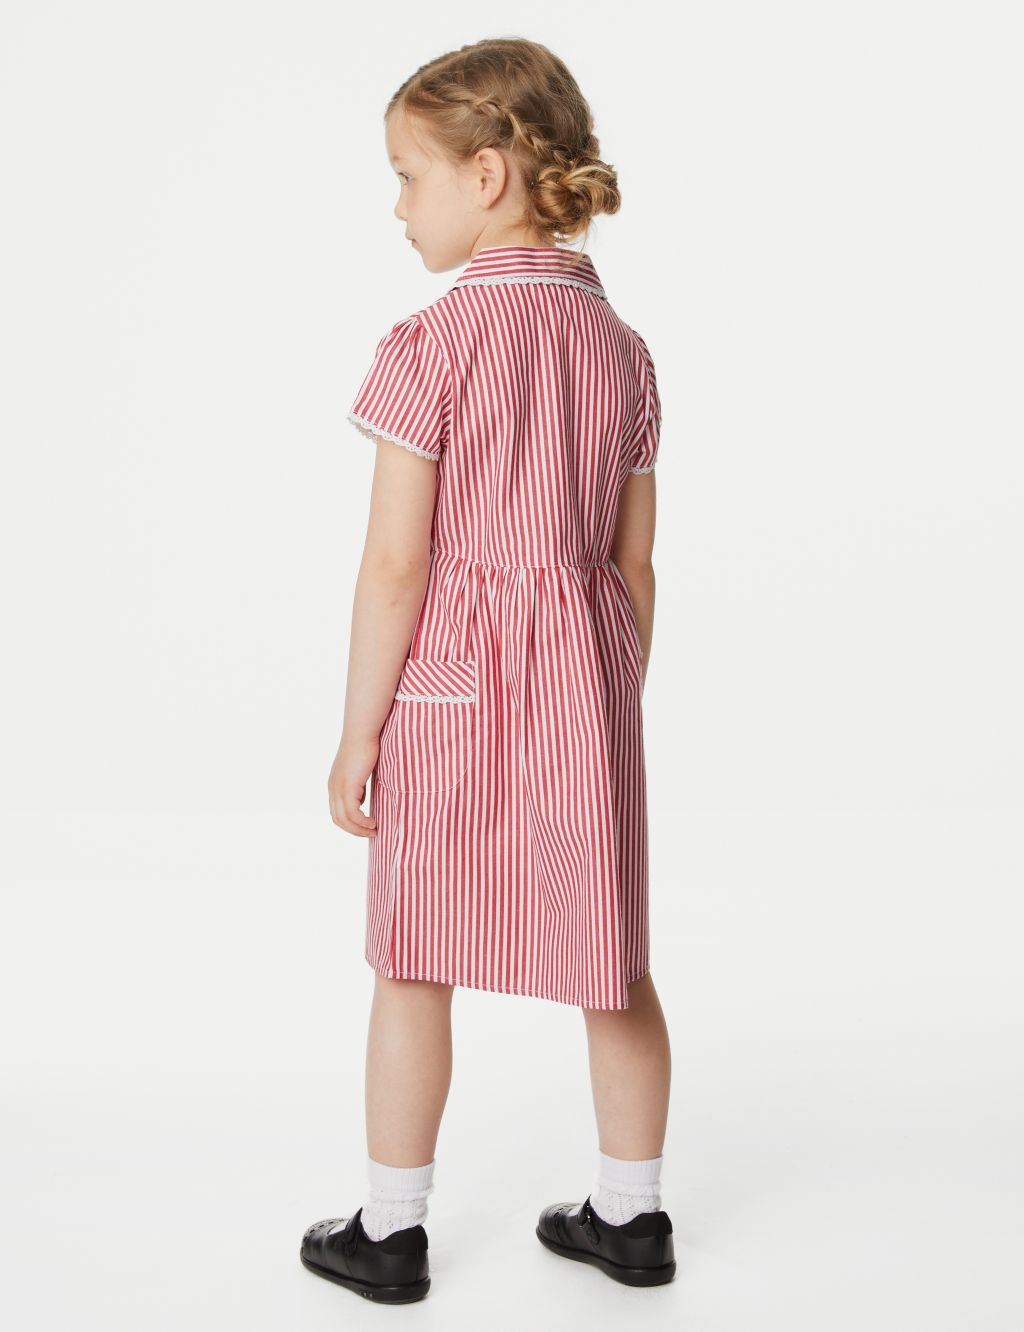 Girls' Pure Cotton Striped School Dress (2-14 Yrs) image 3